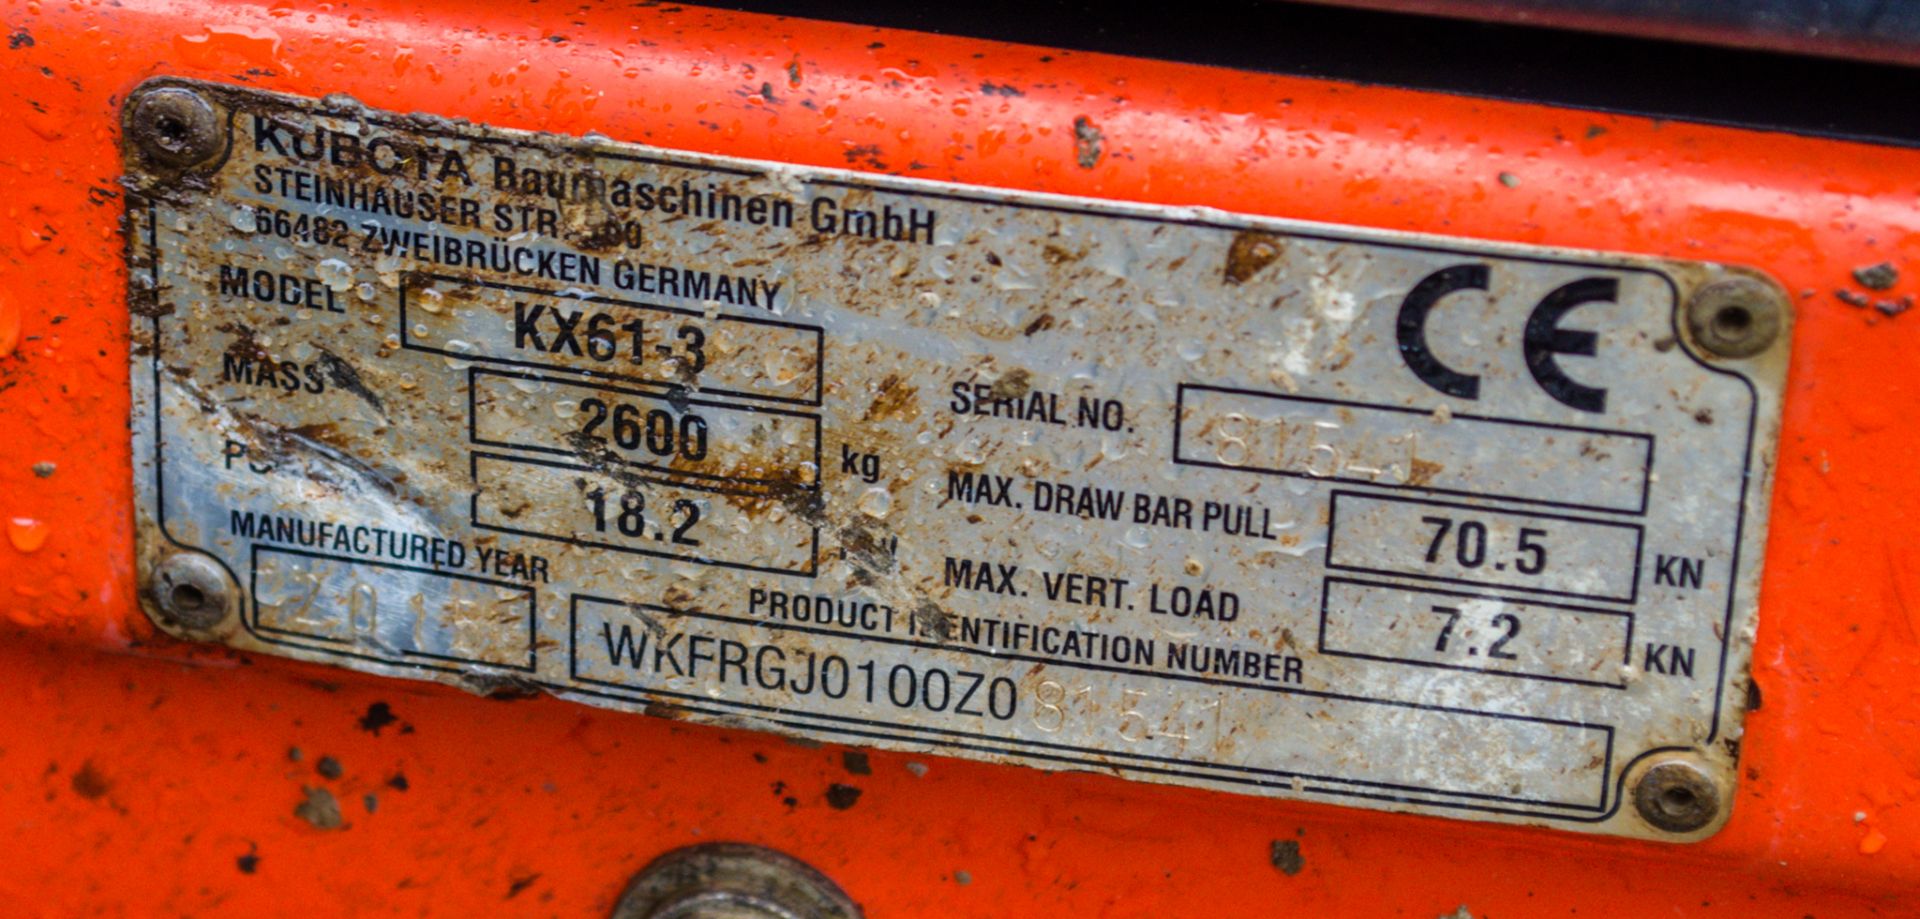 Kubota KX61-3 2.6 tonne rubber tracked mini excavator Year: 2015 S/N: 81541 Recorded Hours: 3107 - Image 21 of 22